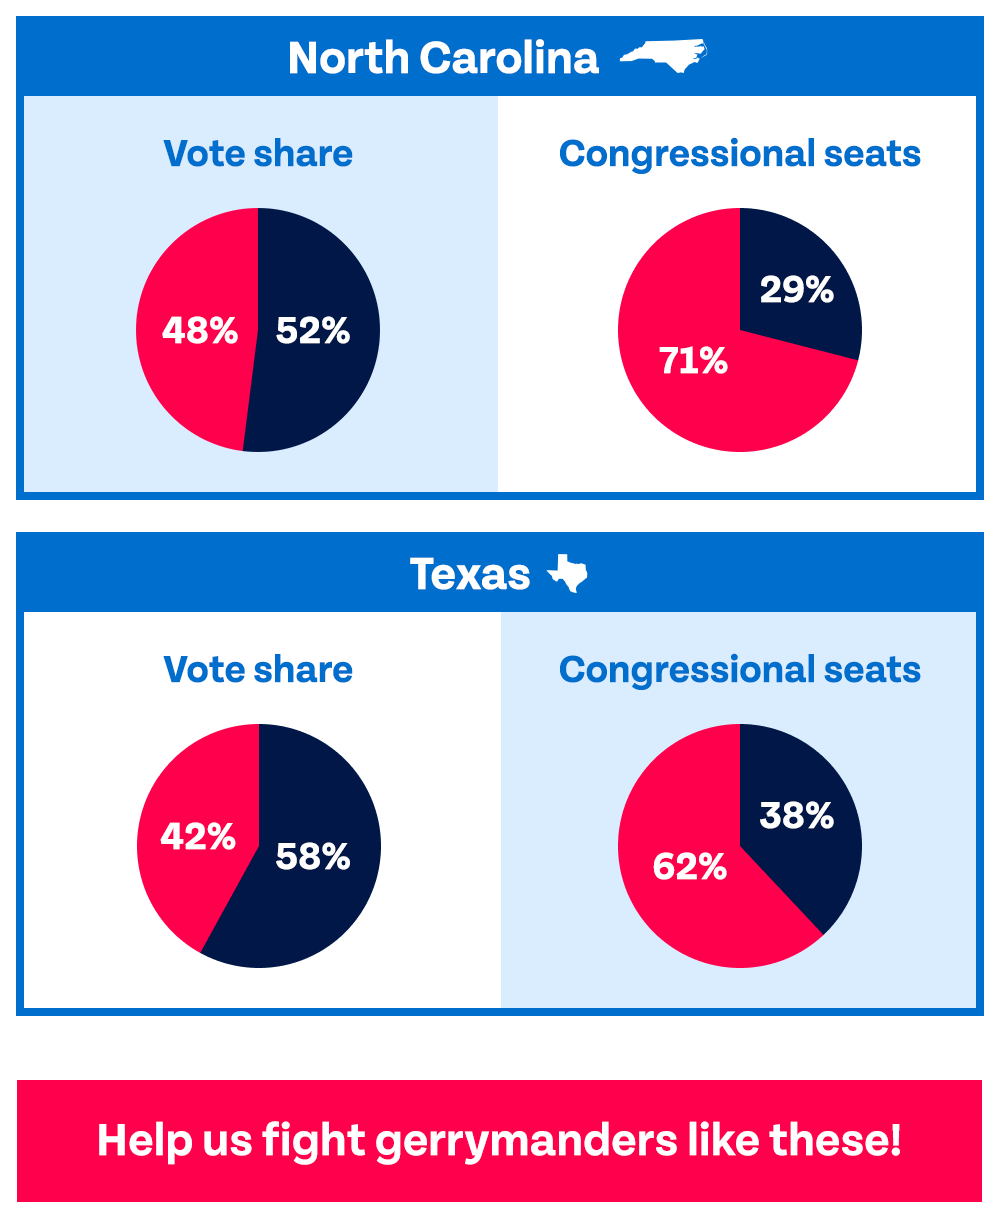 North Carolina and Texas vote share vs. Congressional seats